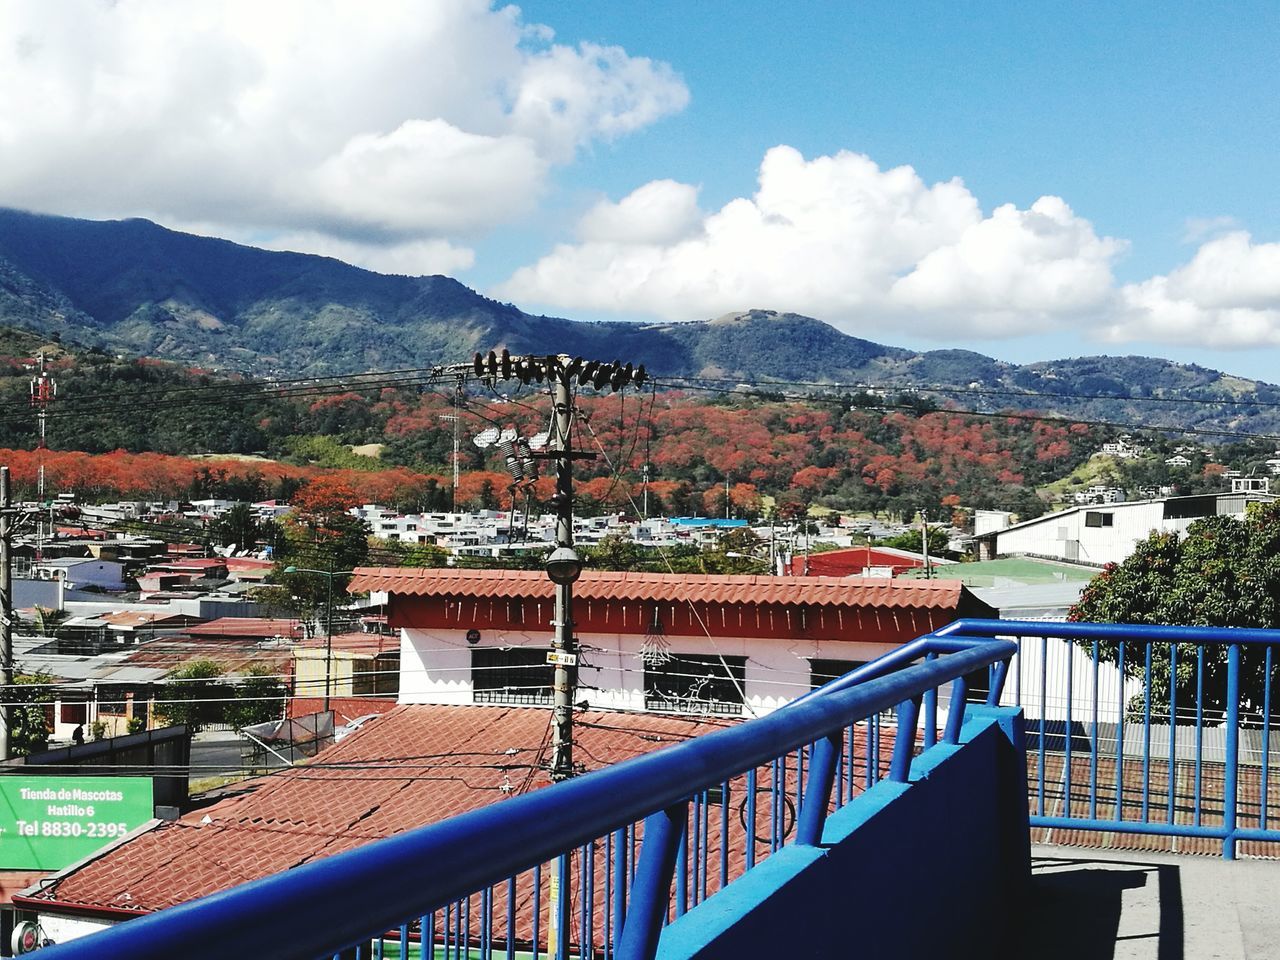 Hatillo, San Jose, Costa Rica